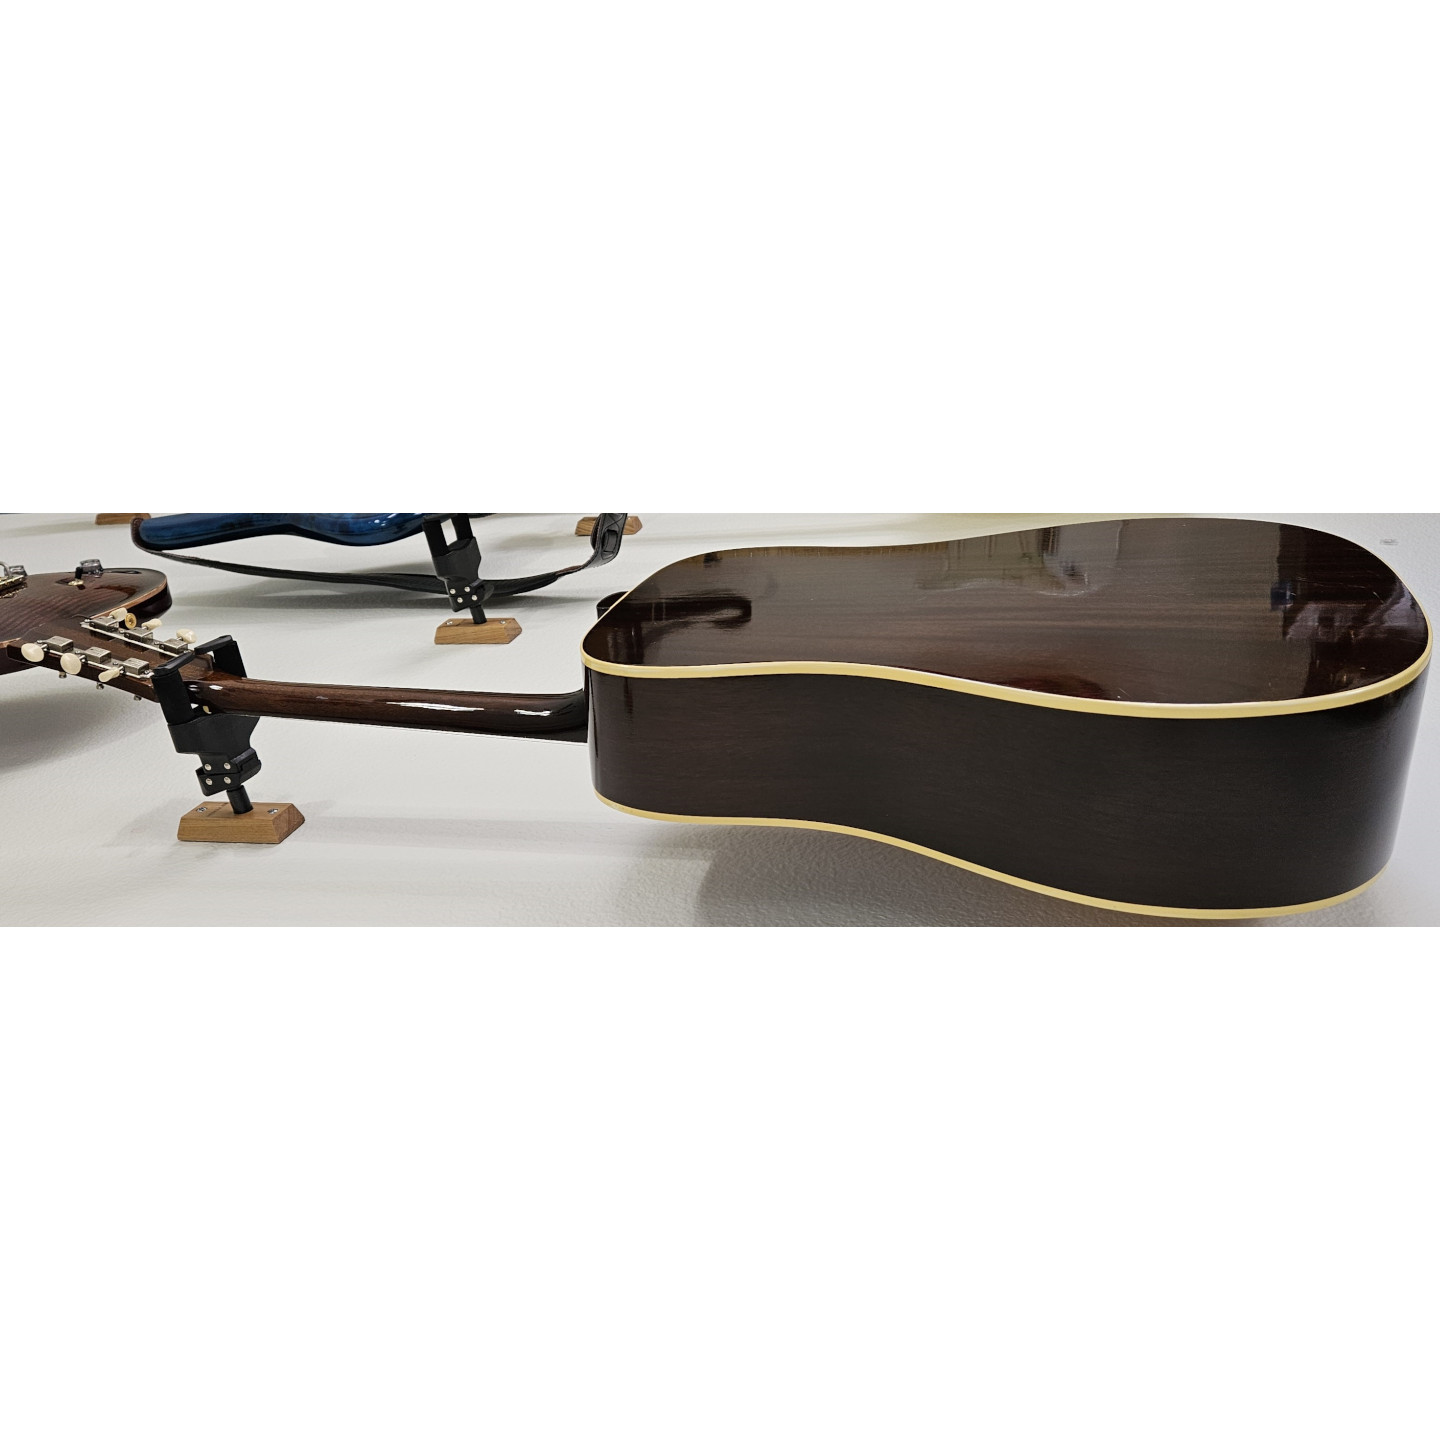 1968 Gibson J-45 ADJ Deluxe Cherry Sunburst Dreadnought Vintage Acoustic Guitar